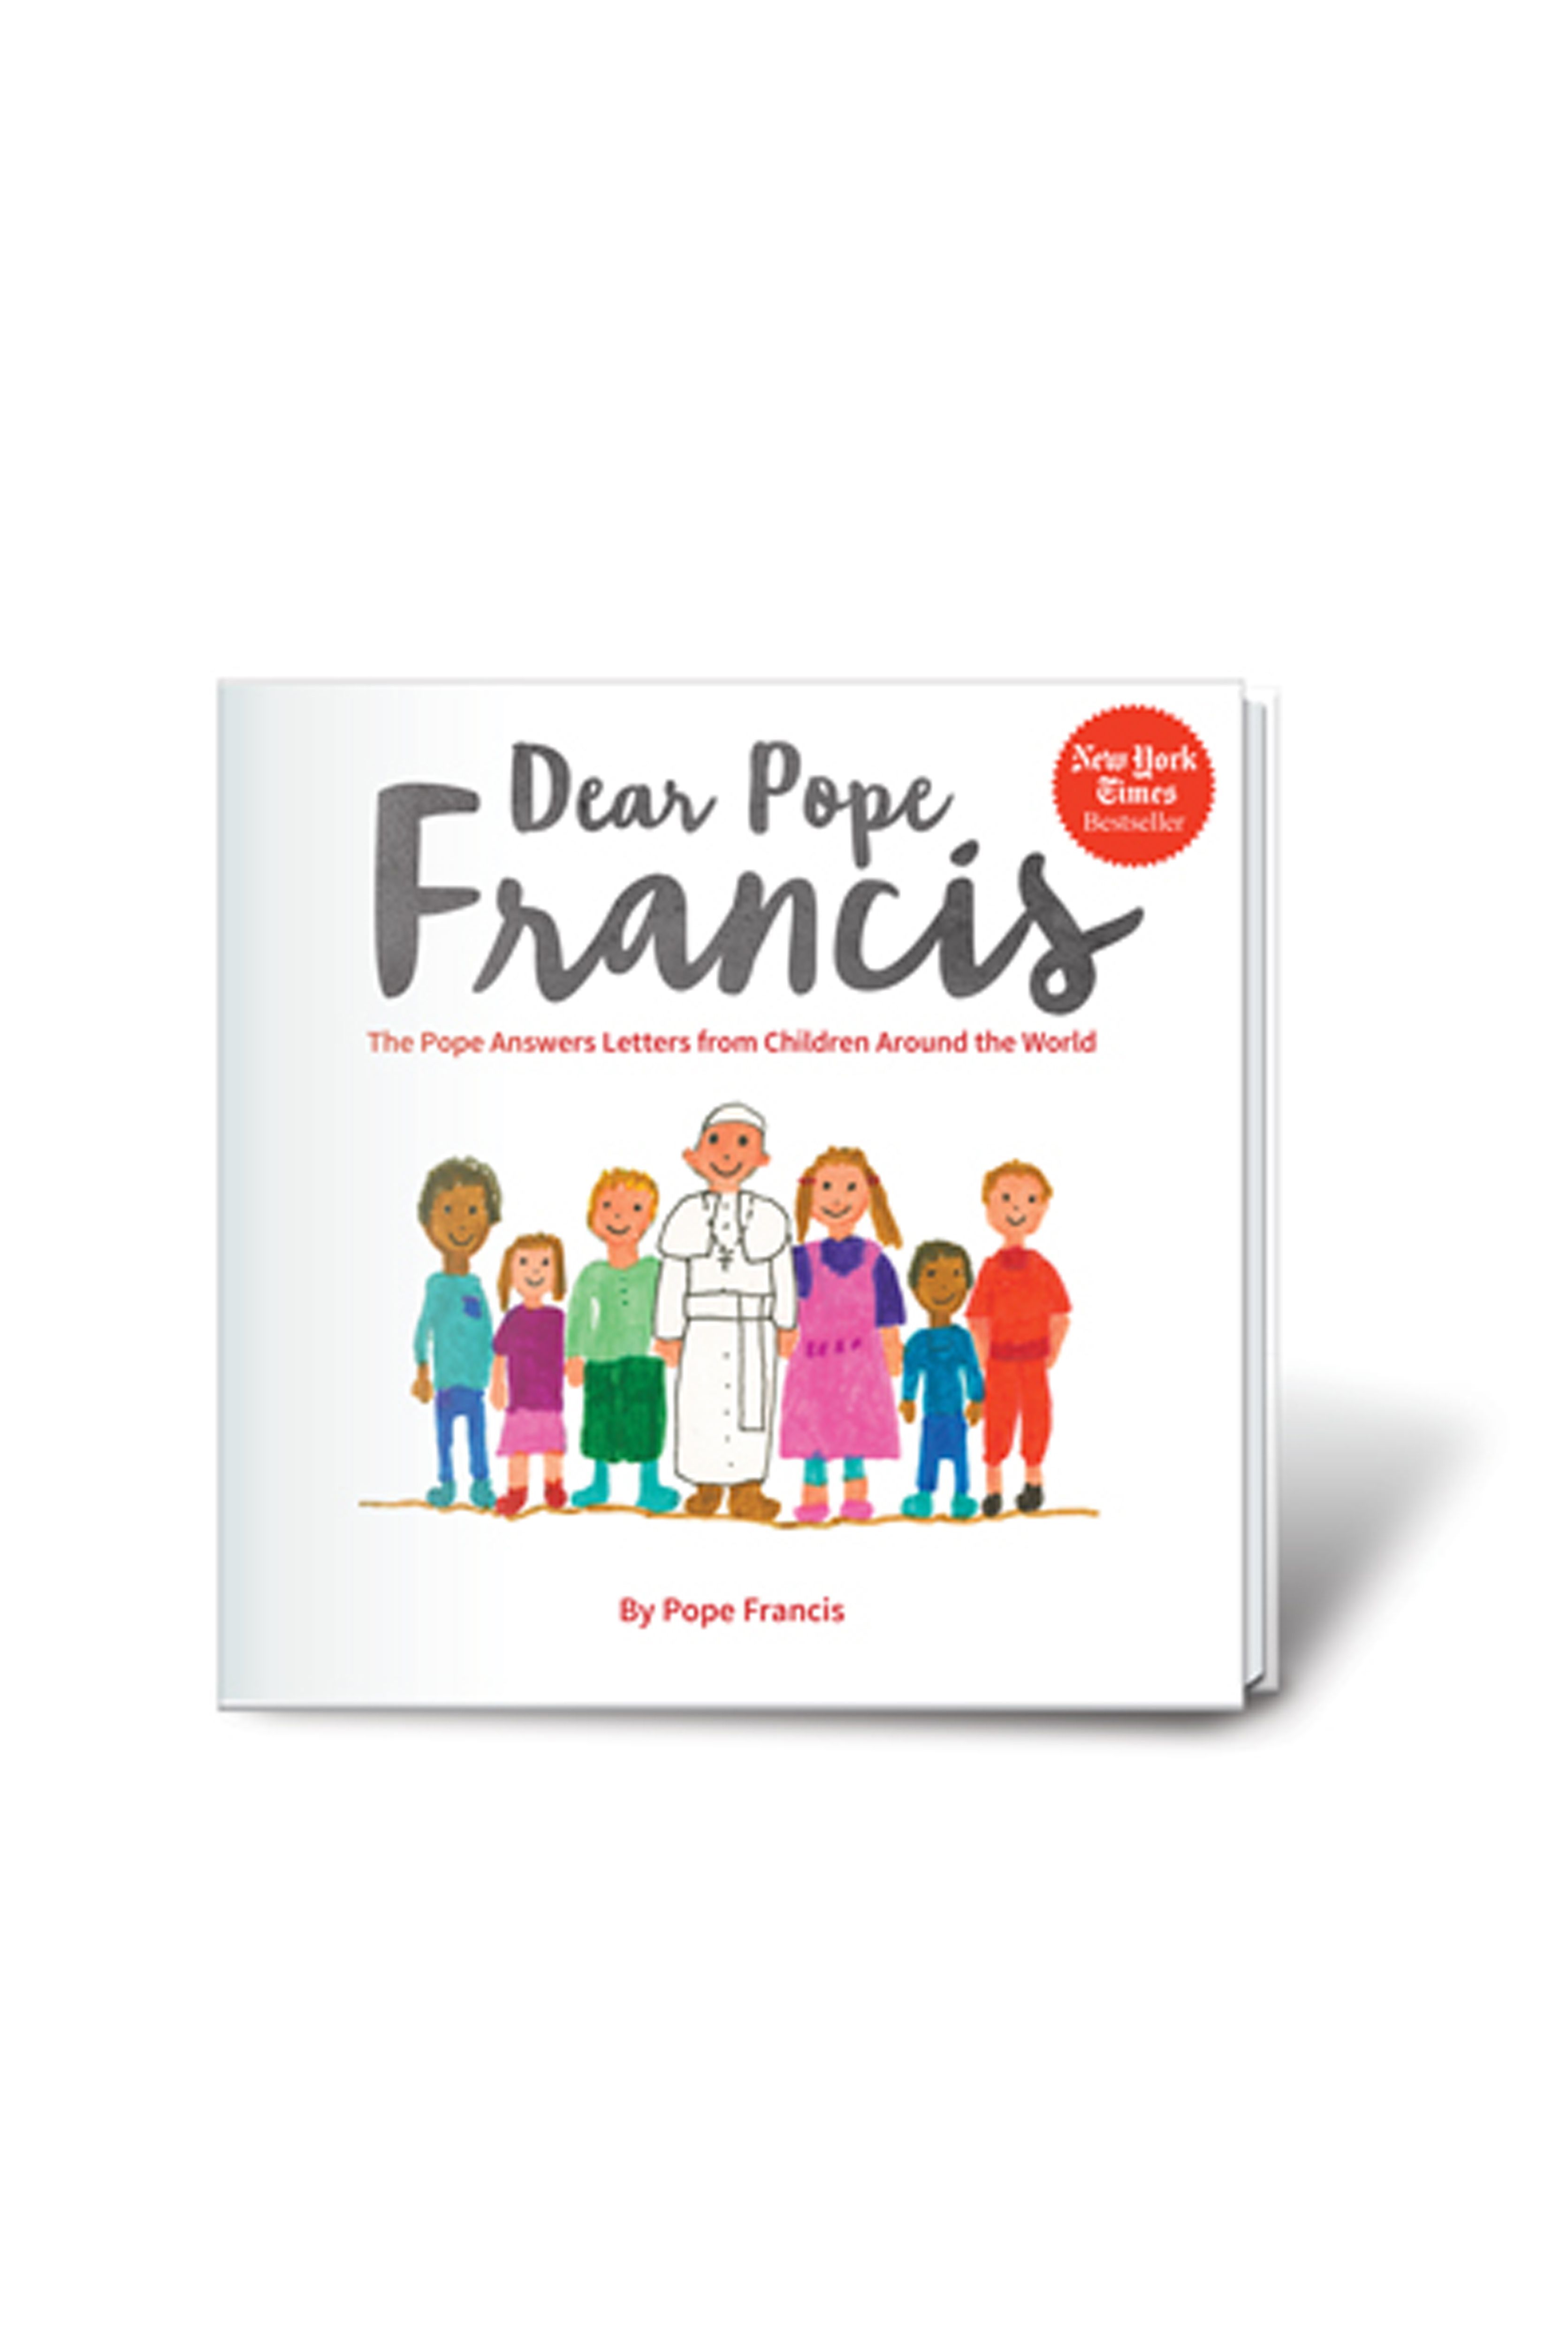 'Dear Pope Francis'